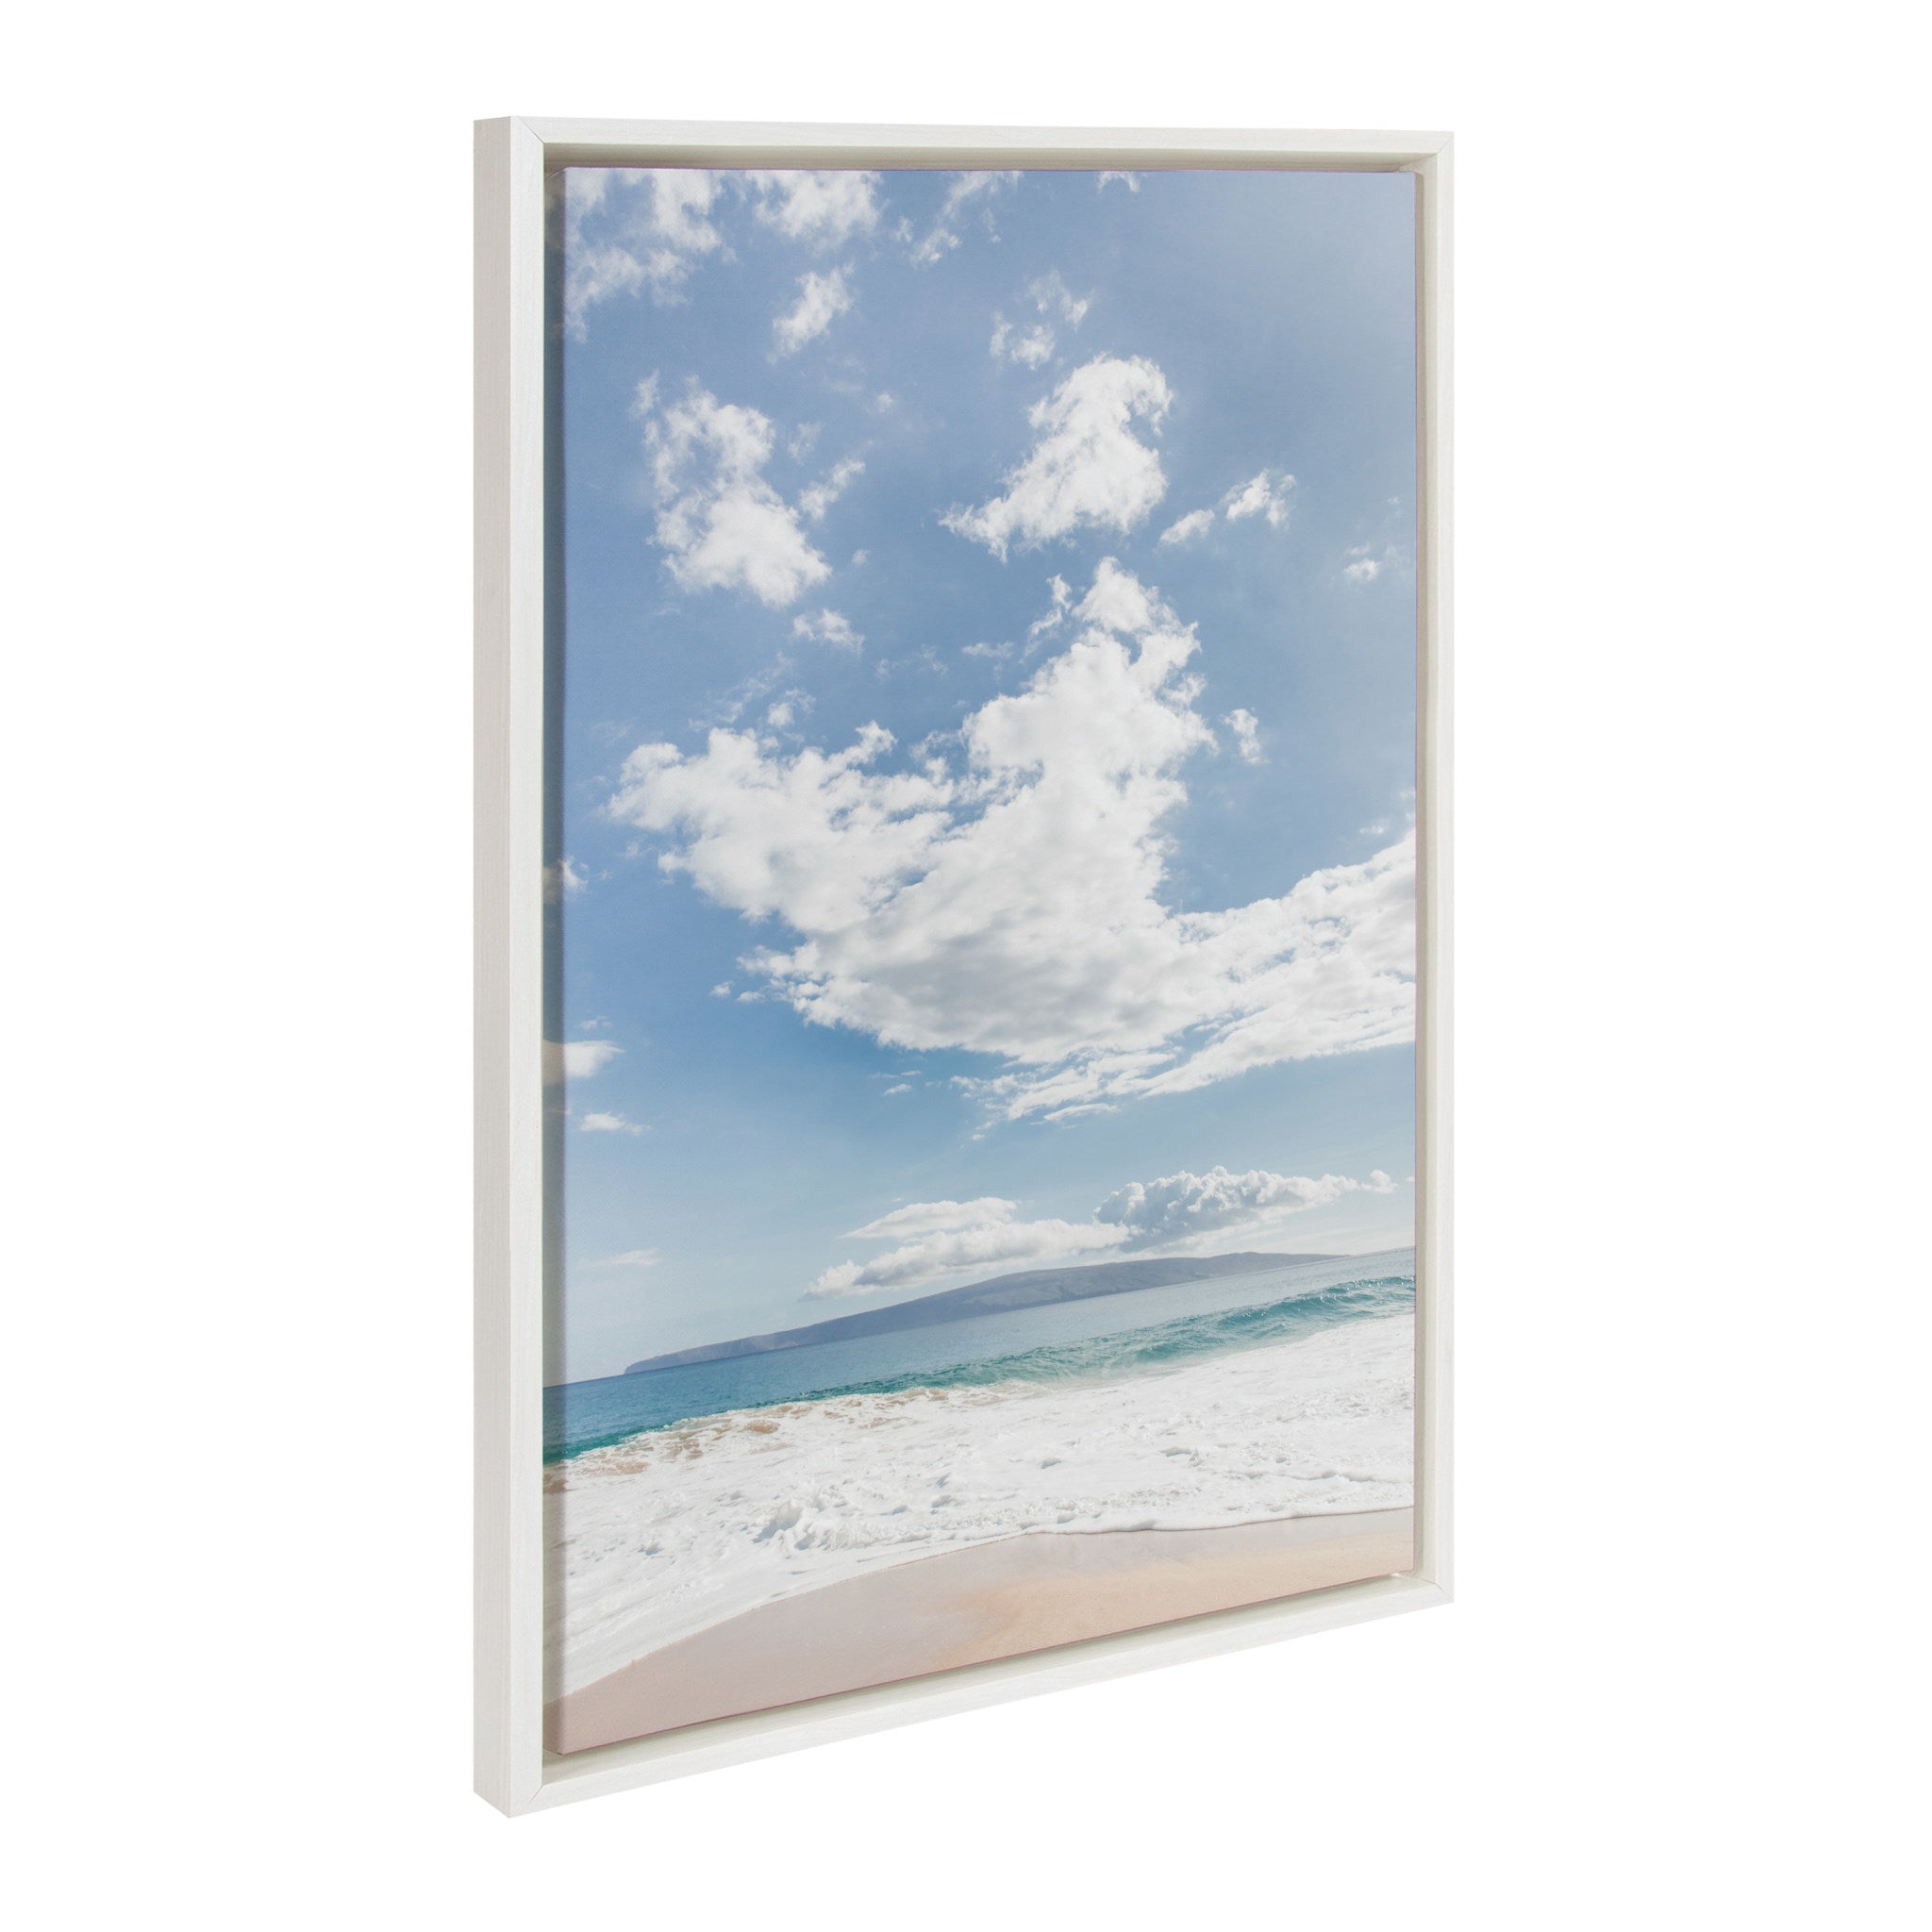 Sylvie Beach Framed Canvas by Alicia Abla